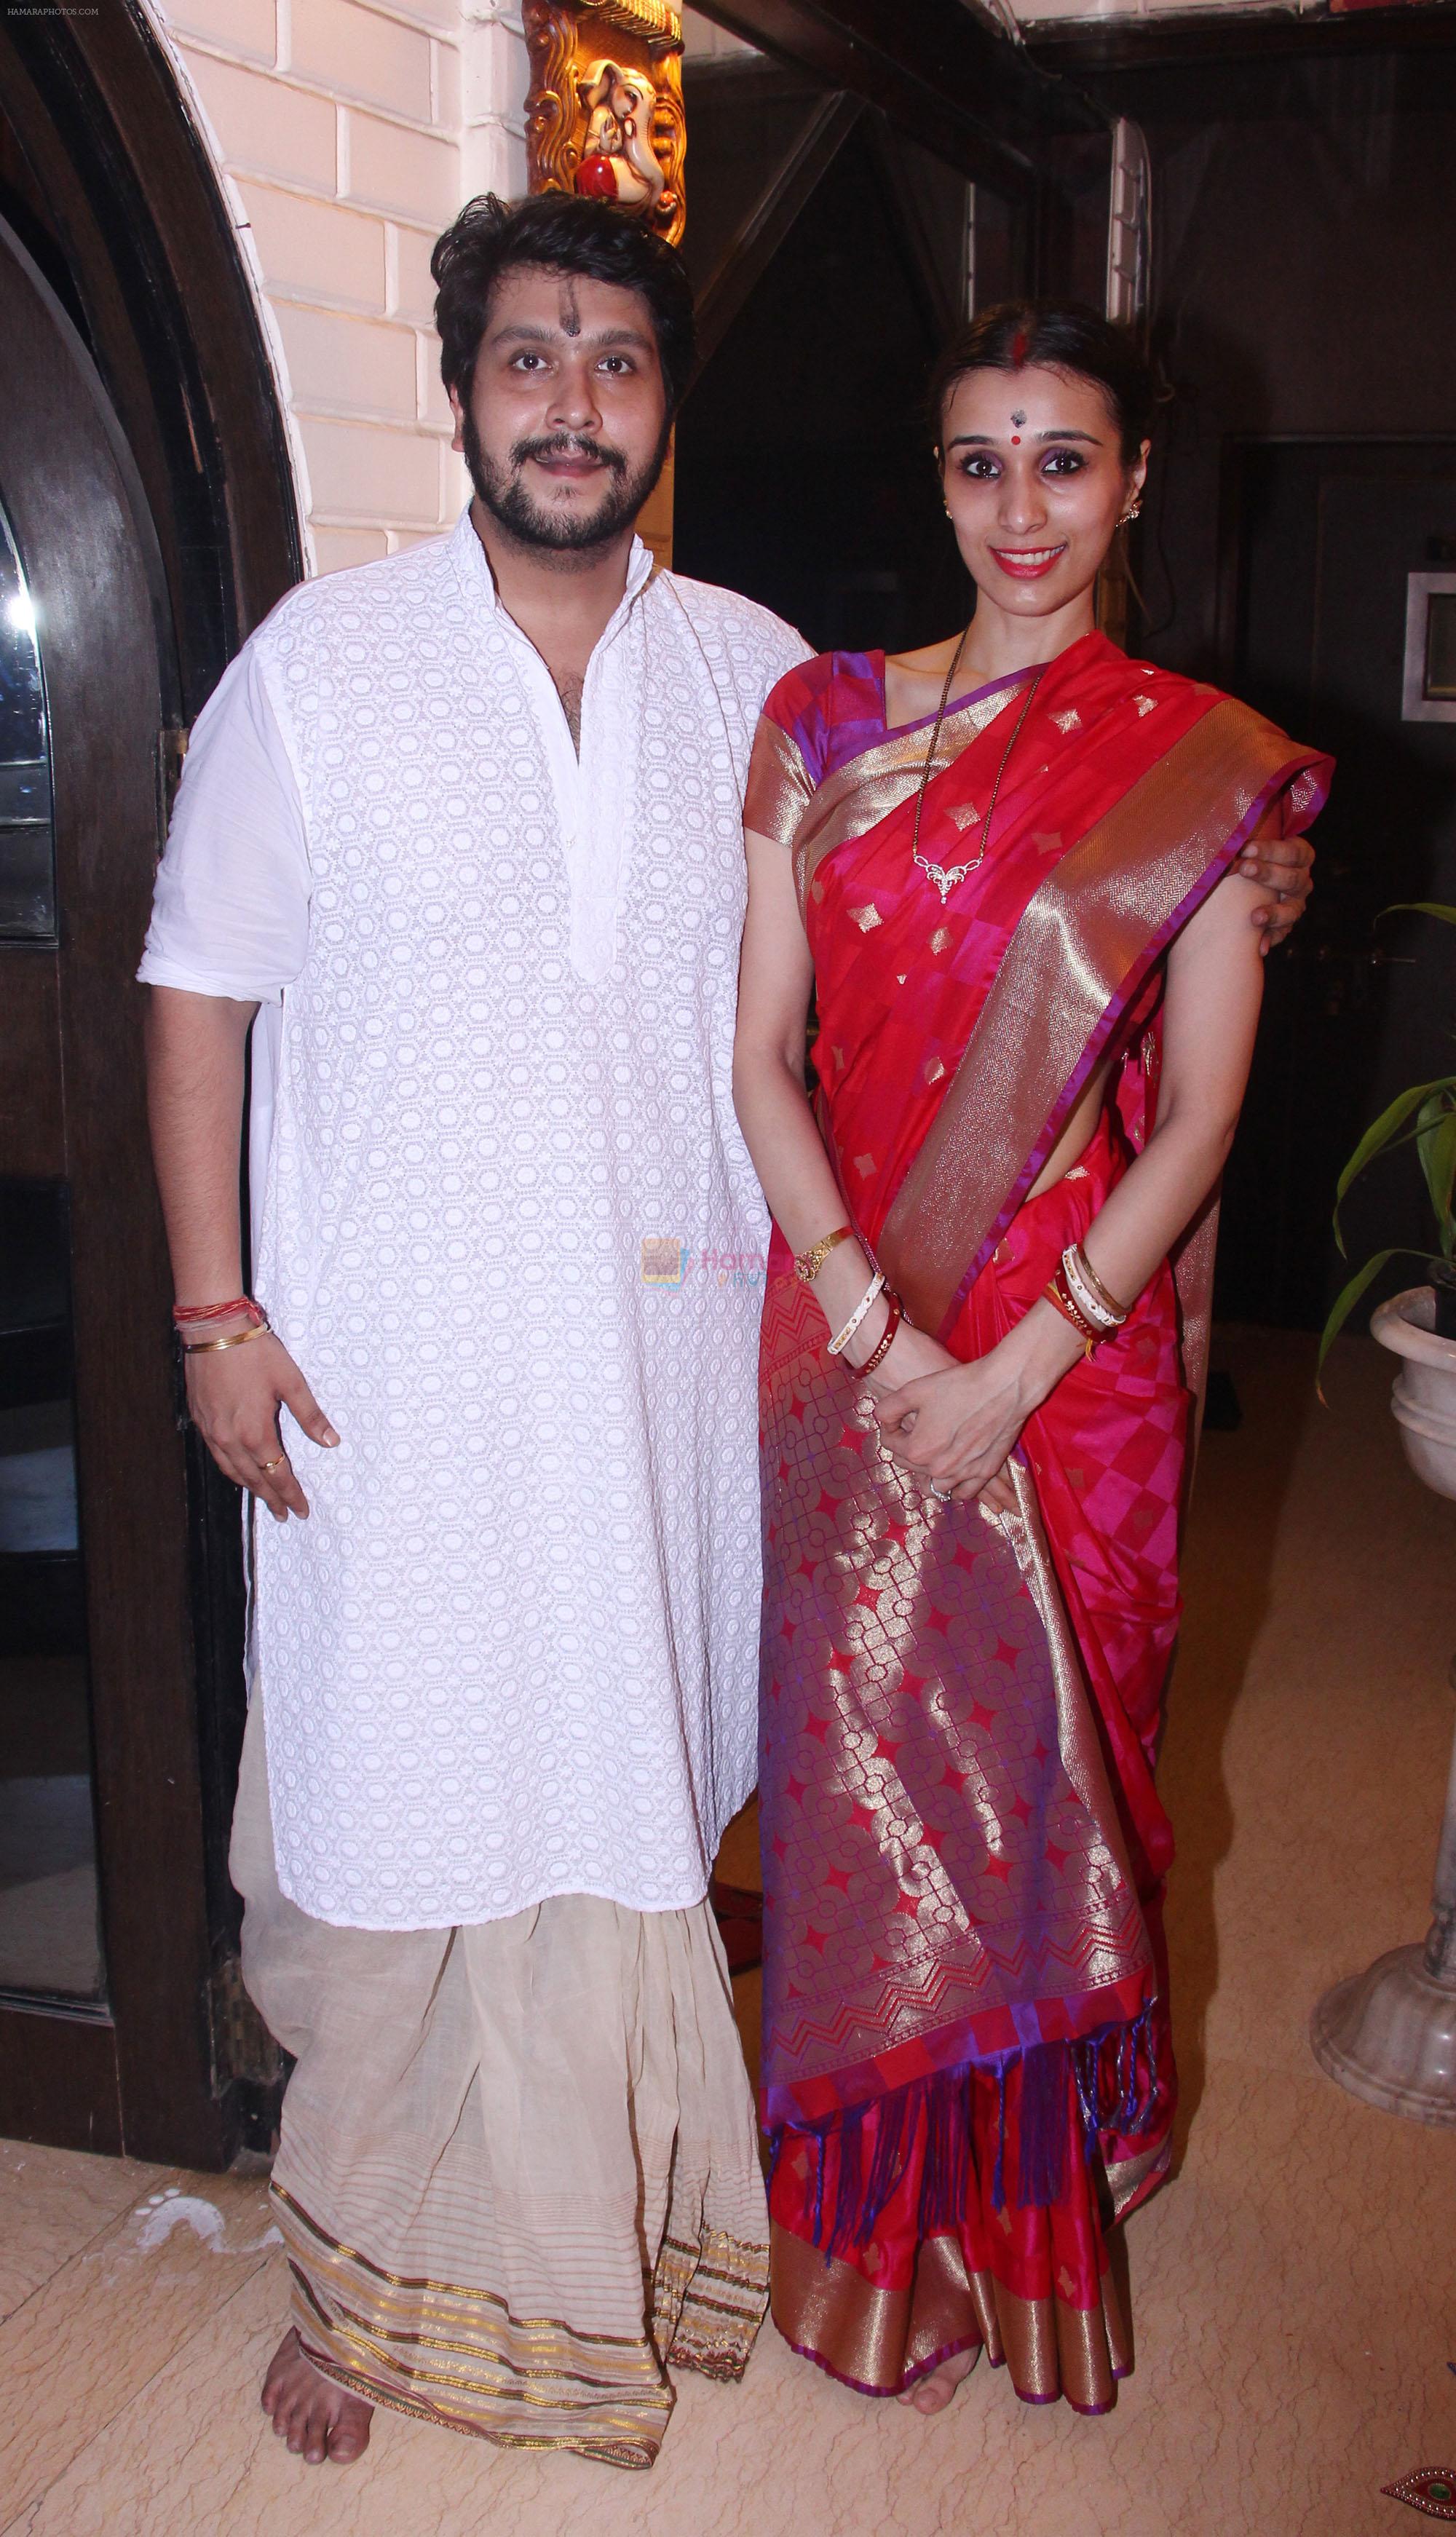 Bappa and Taneesha Lahiri at their Lakshmi Pooja at the Lahiri House in Juhu